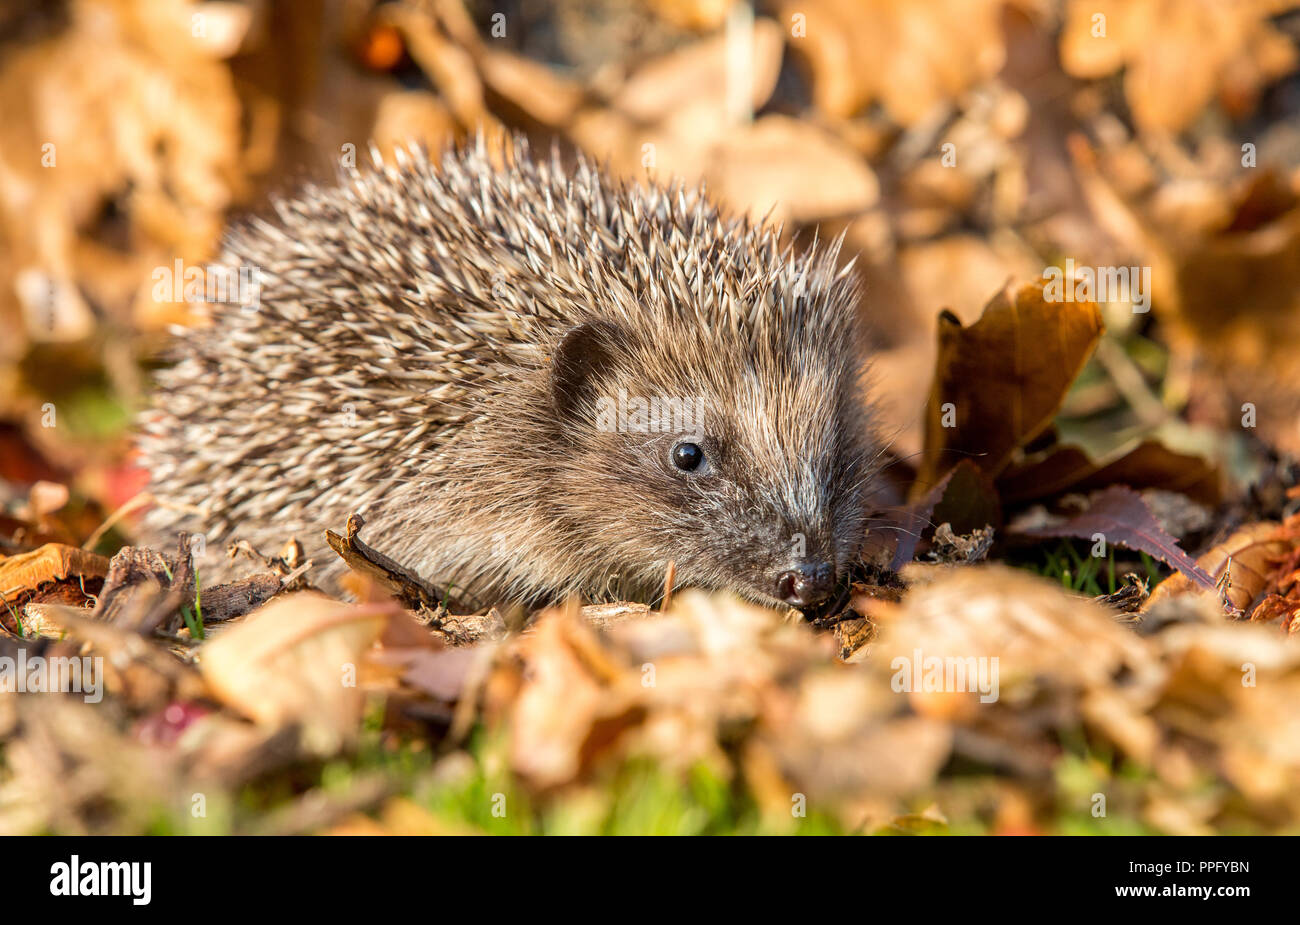 Hedgehog, native, wild, European hedgehog in Autumn or Fall with golden leaves.  Facing right.  Scientific name: Erinaceus europaeus. Horizontal Stock Photo